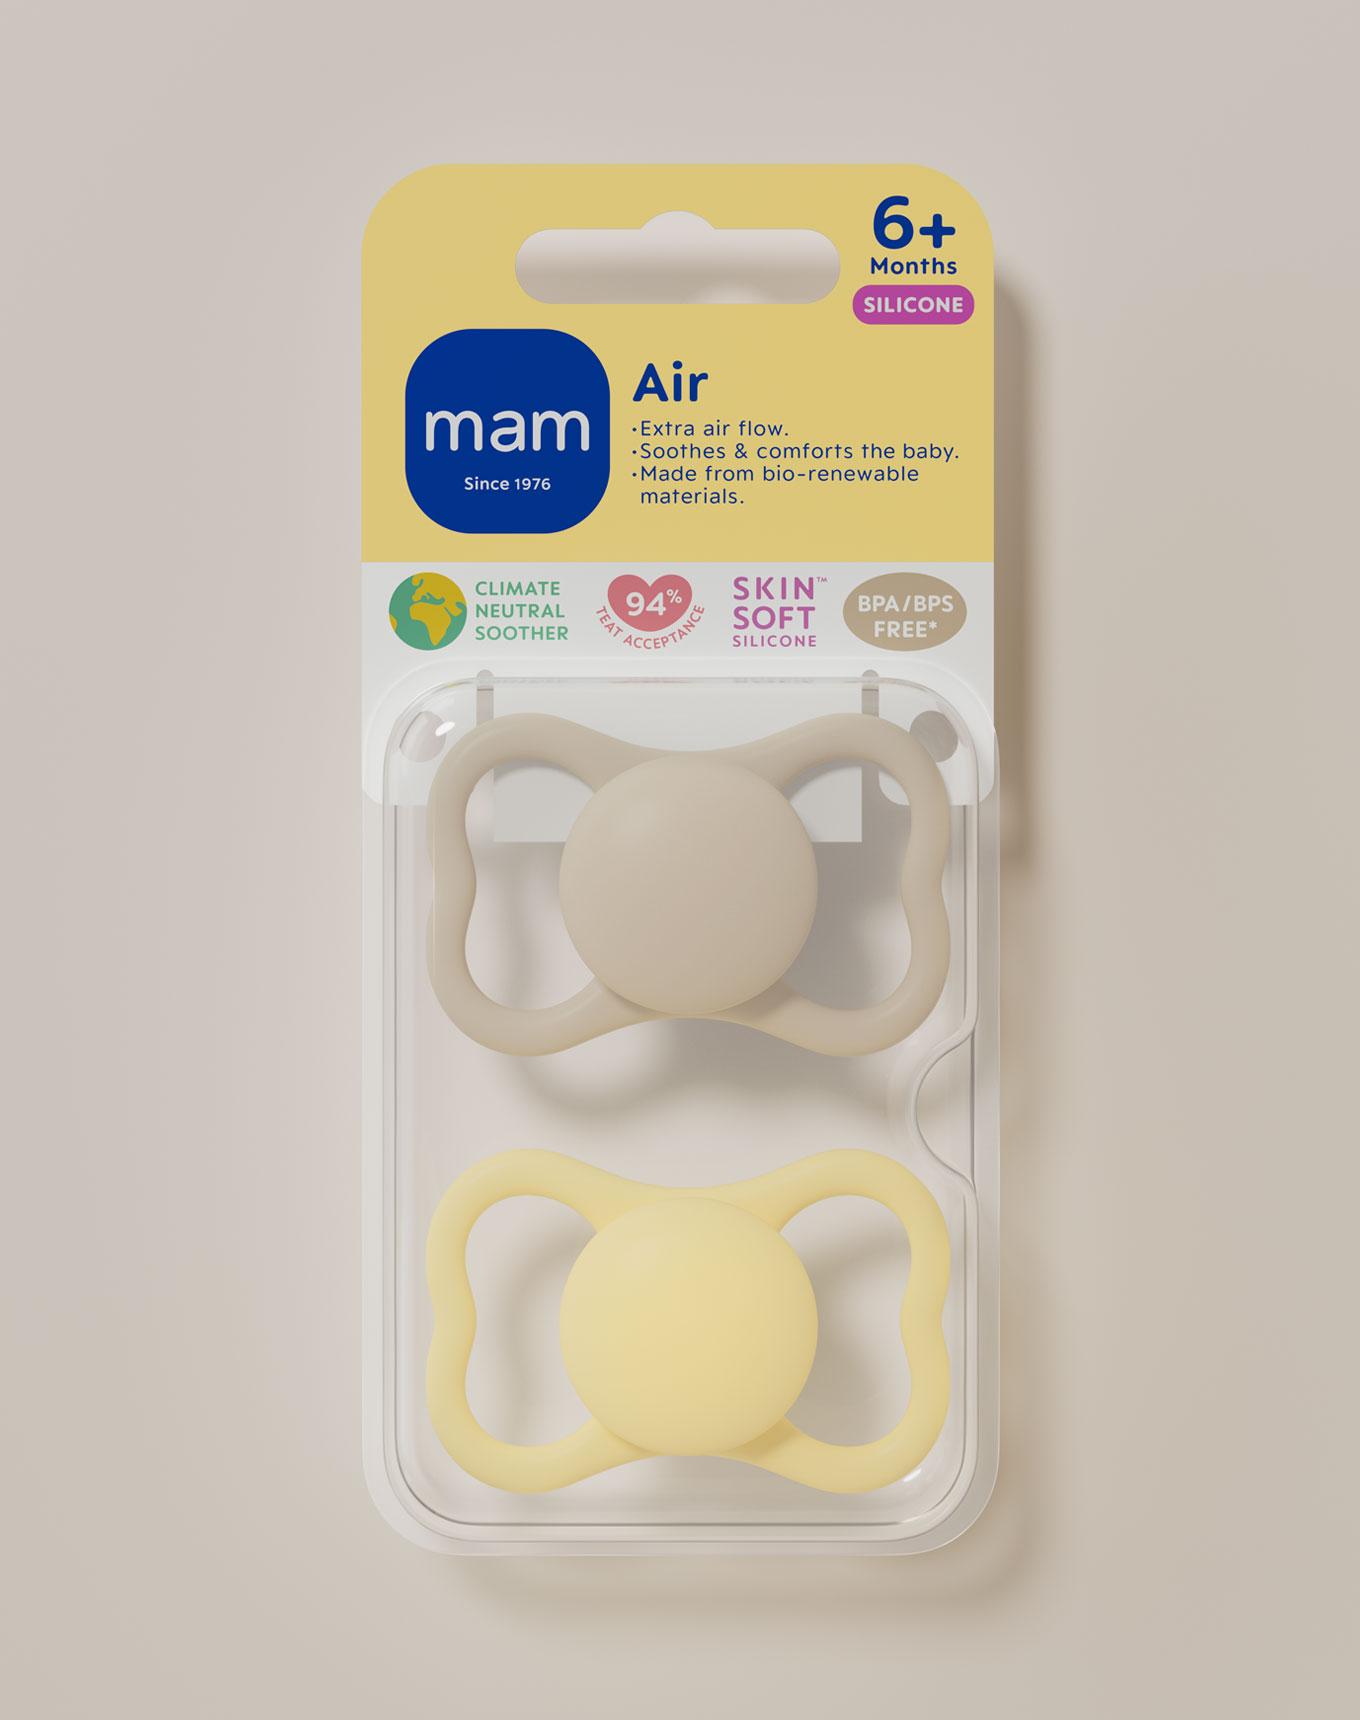 Mam Packaging Design